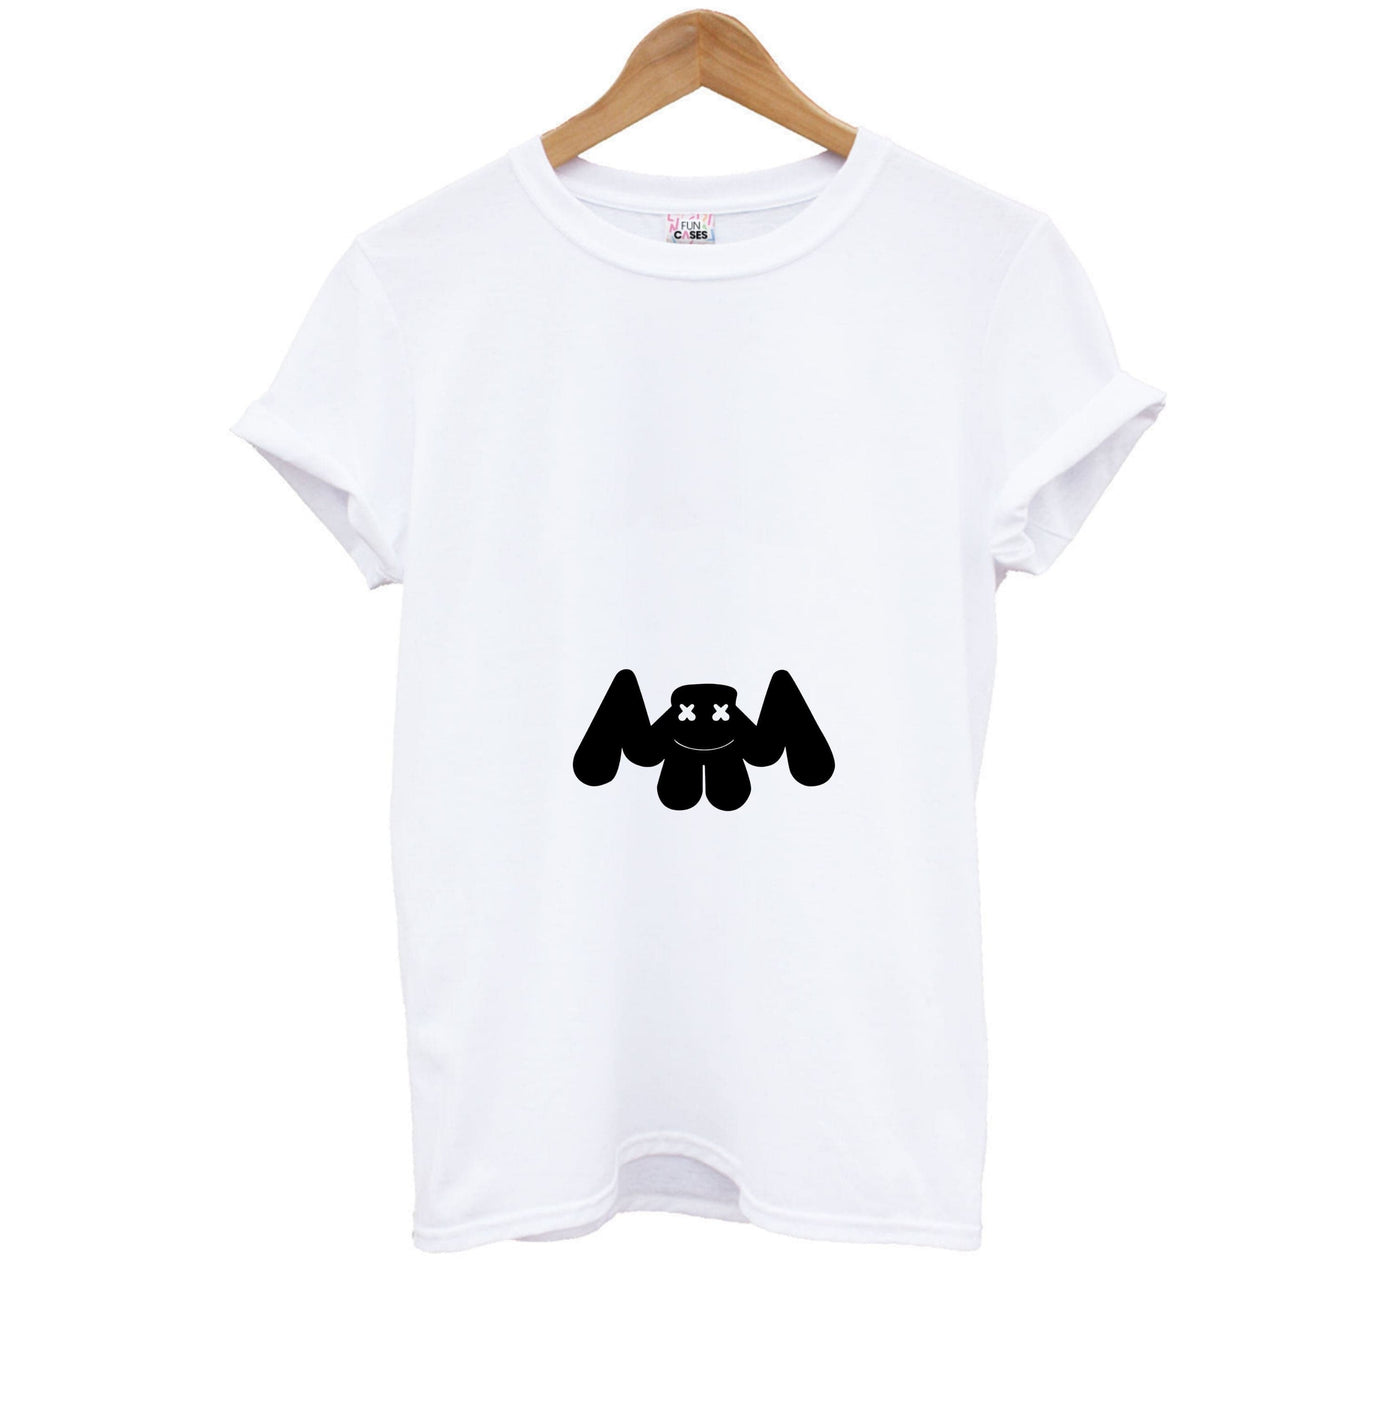 Symbol - Marshmello Kids T-Shirt